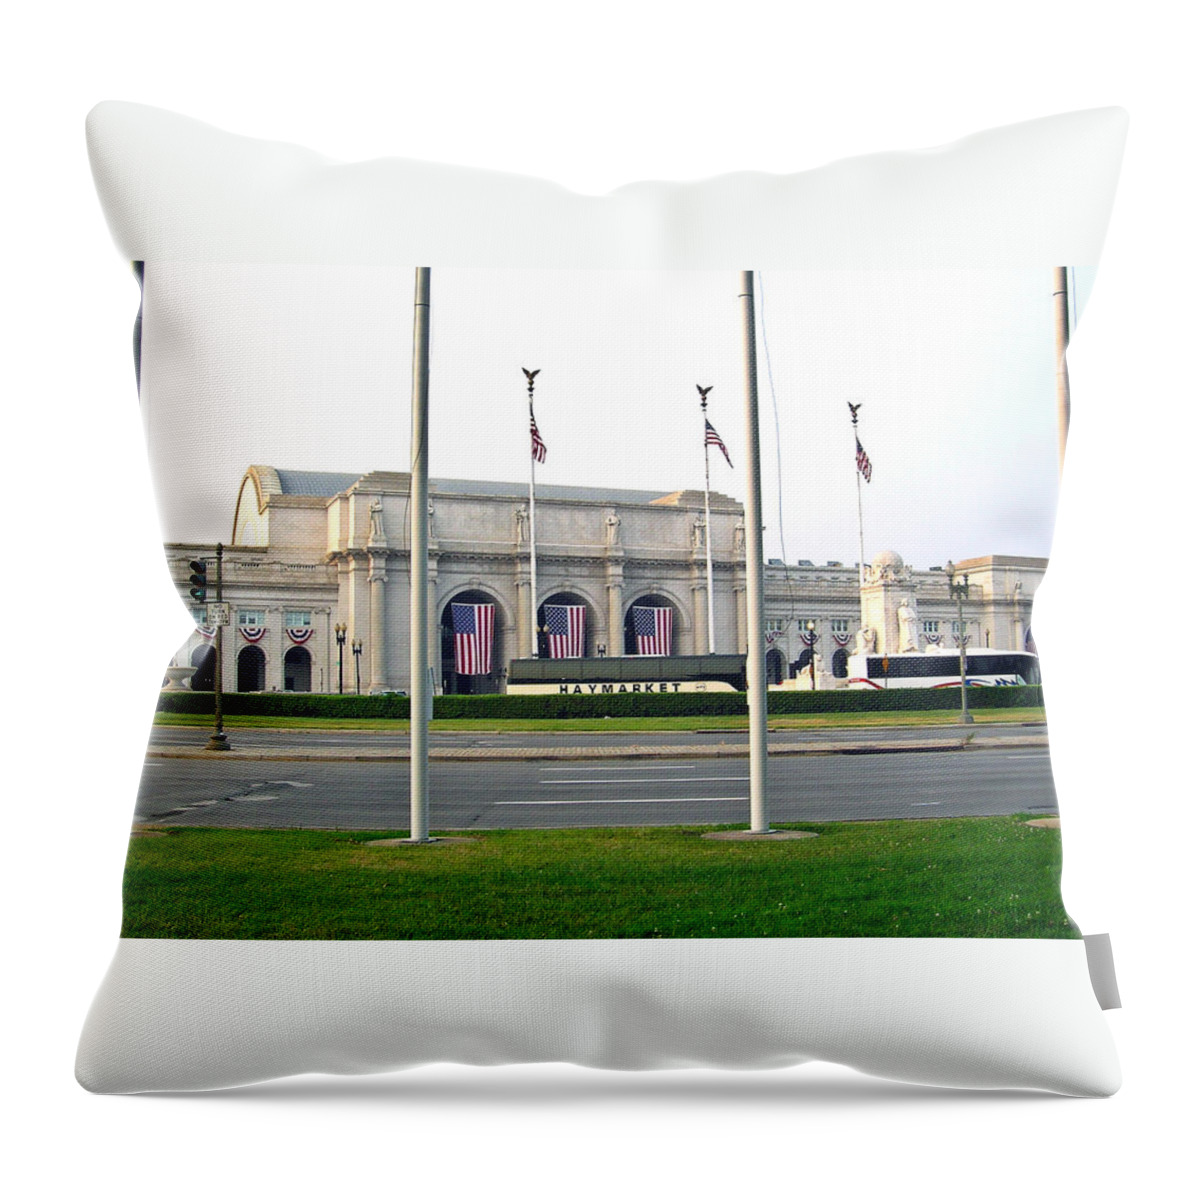 Union Throw Pillow featuring the photograph Union Station Washington DC by Douglas Barnett